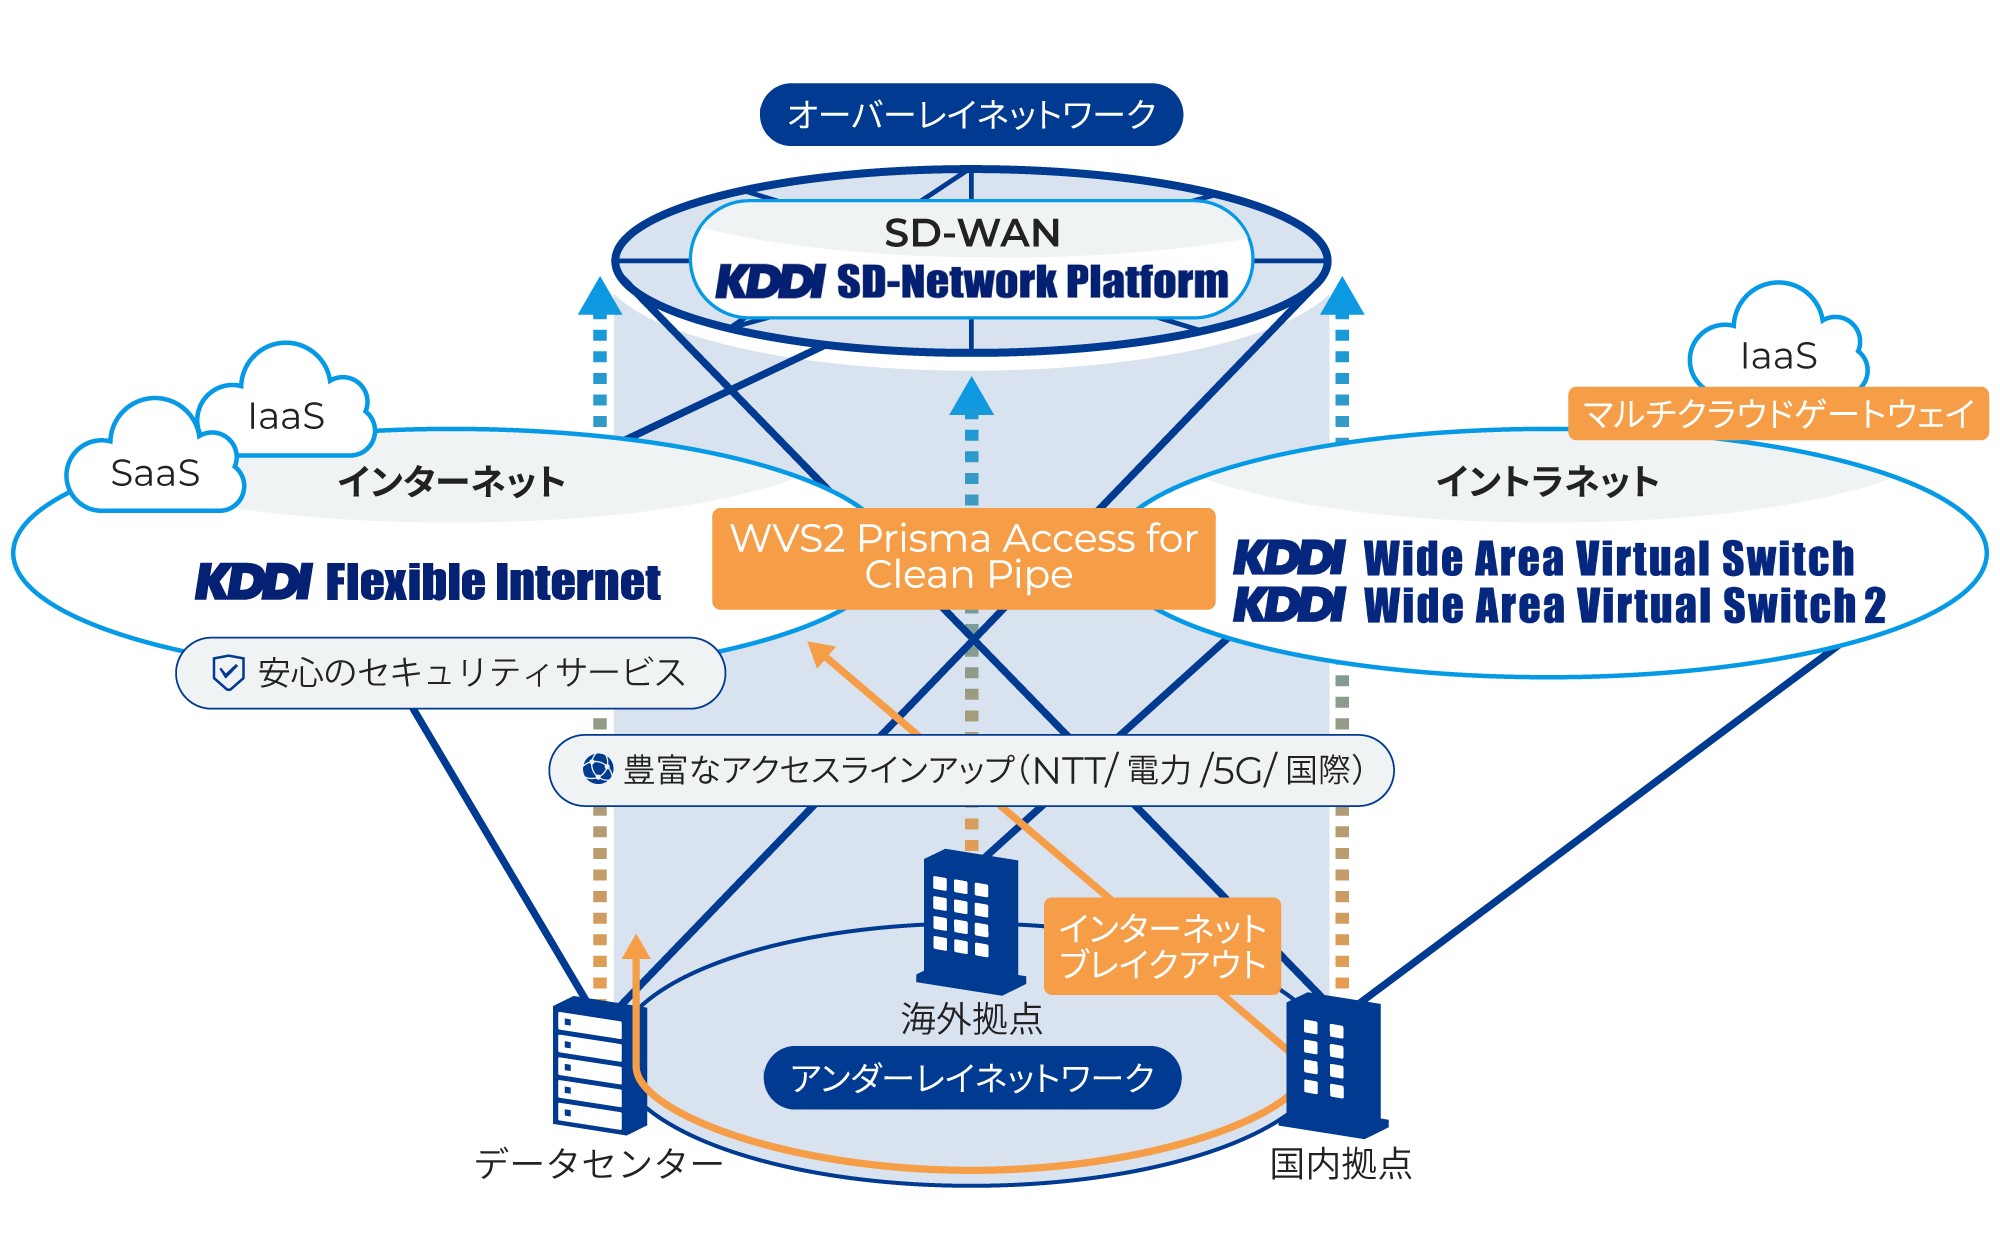 KDDIが提供するネットワークサービスの全体像